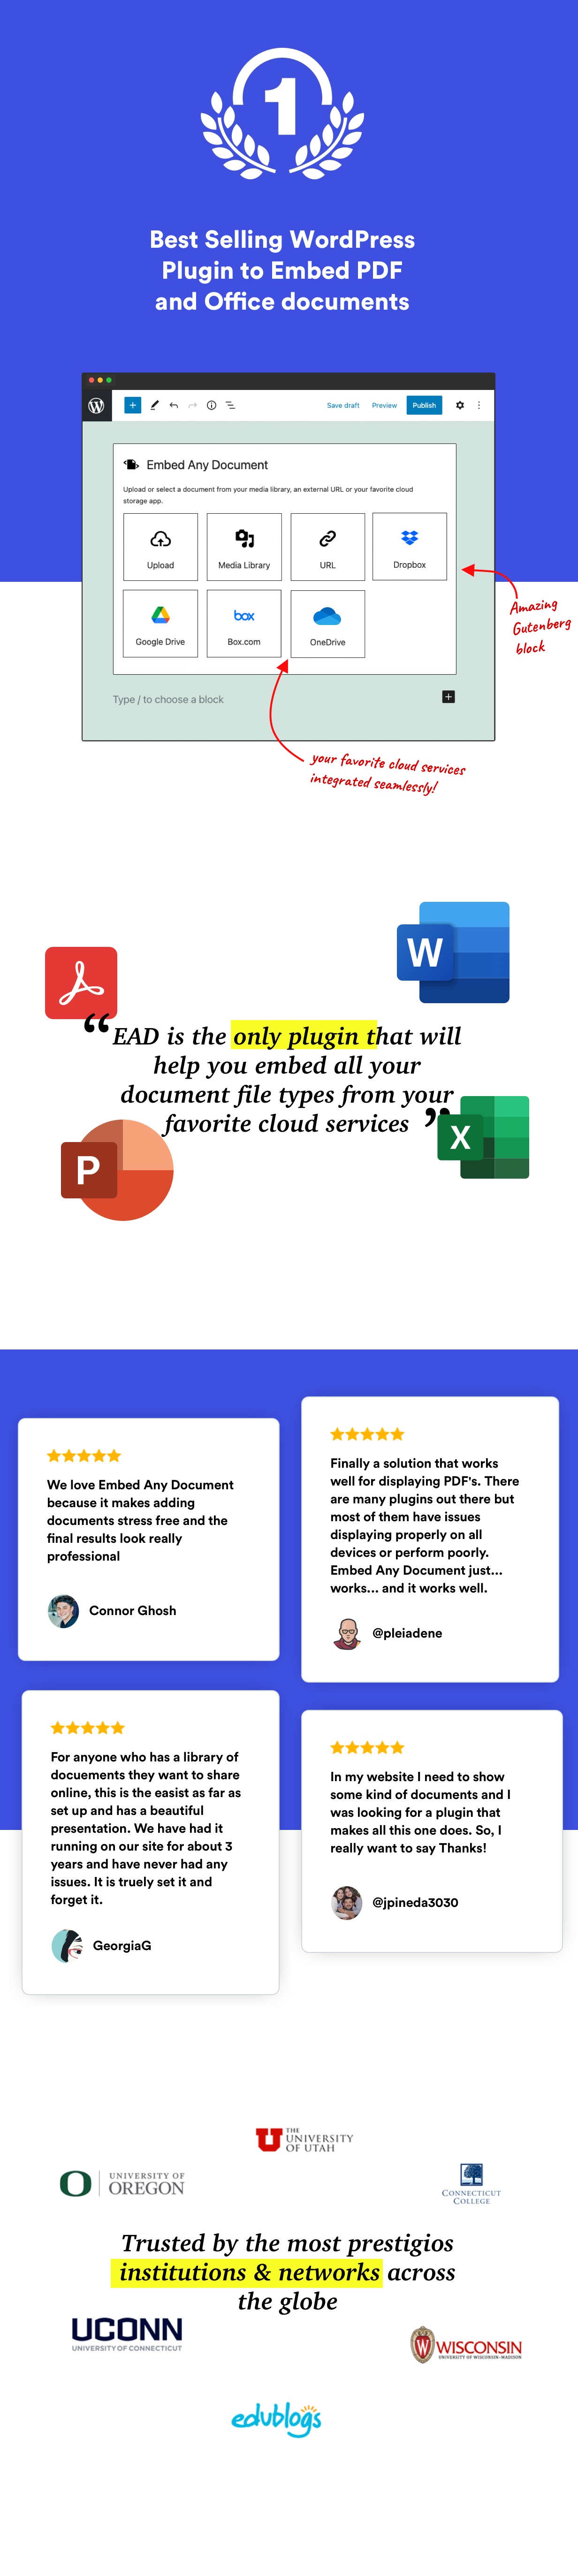 Embed Any Document Plus - WordPress Plugin - 3